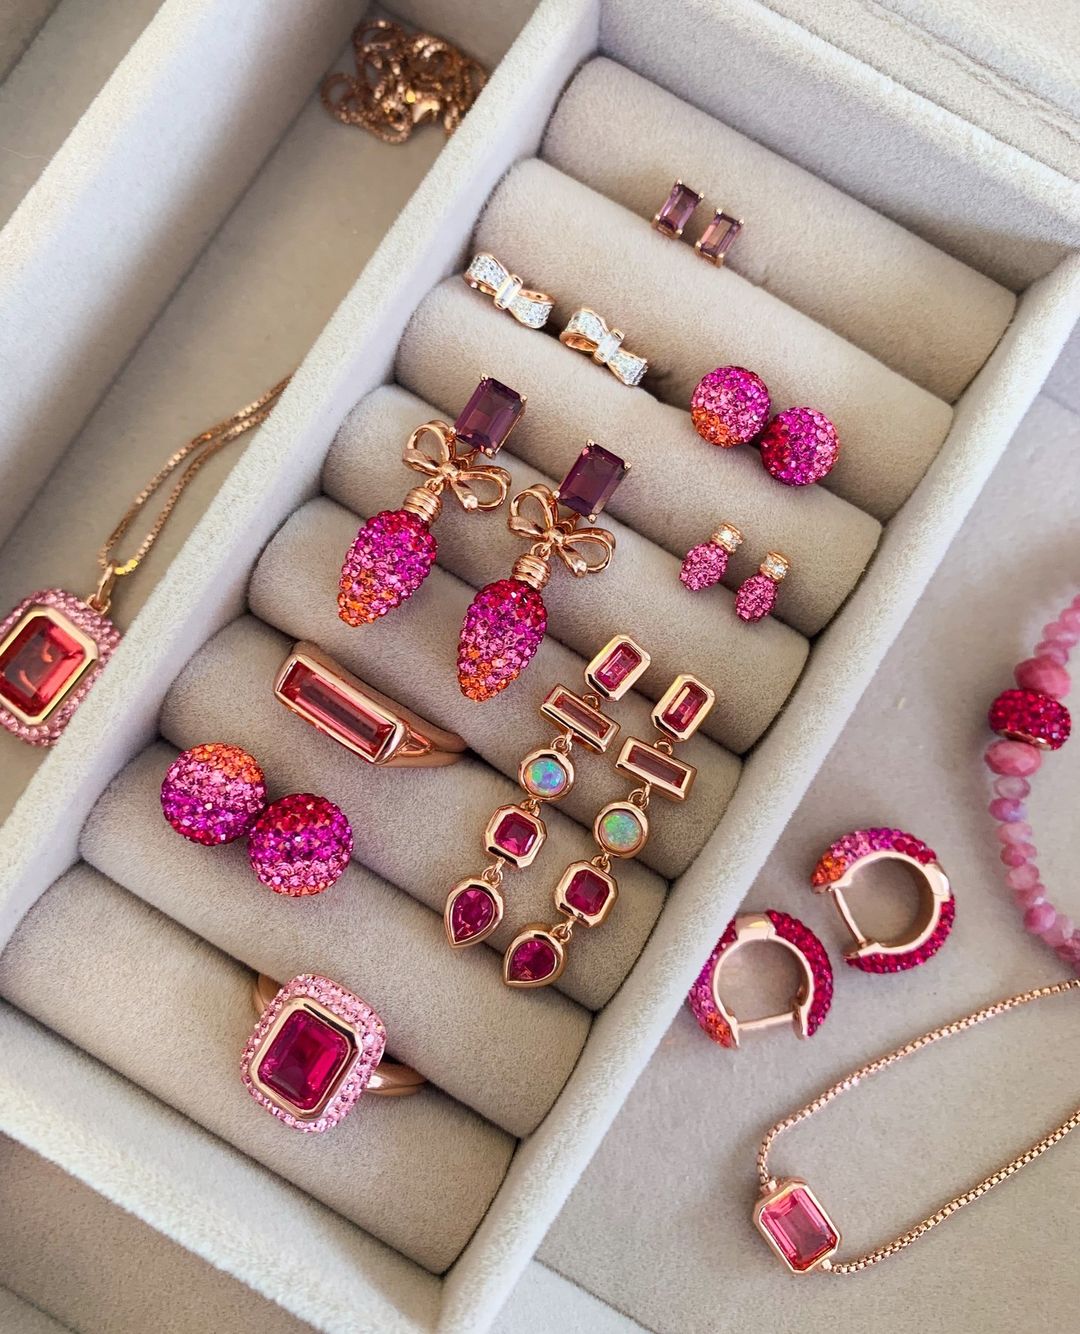 Variety of pink earrings in jewellery holder.